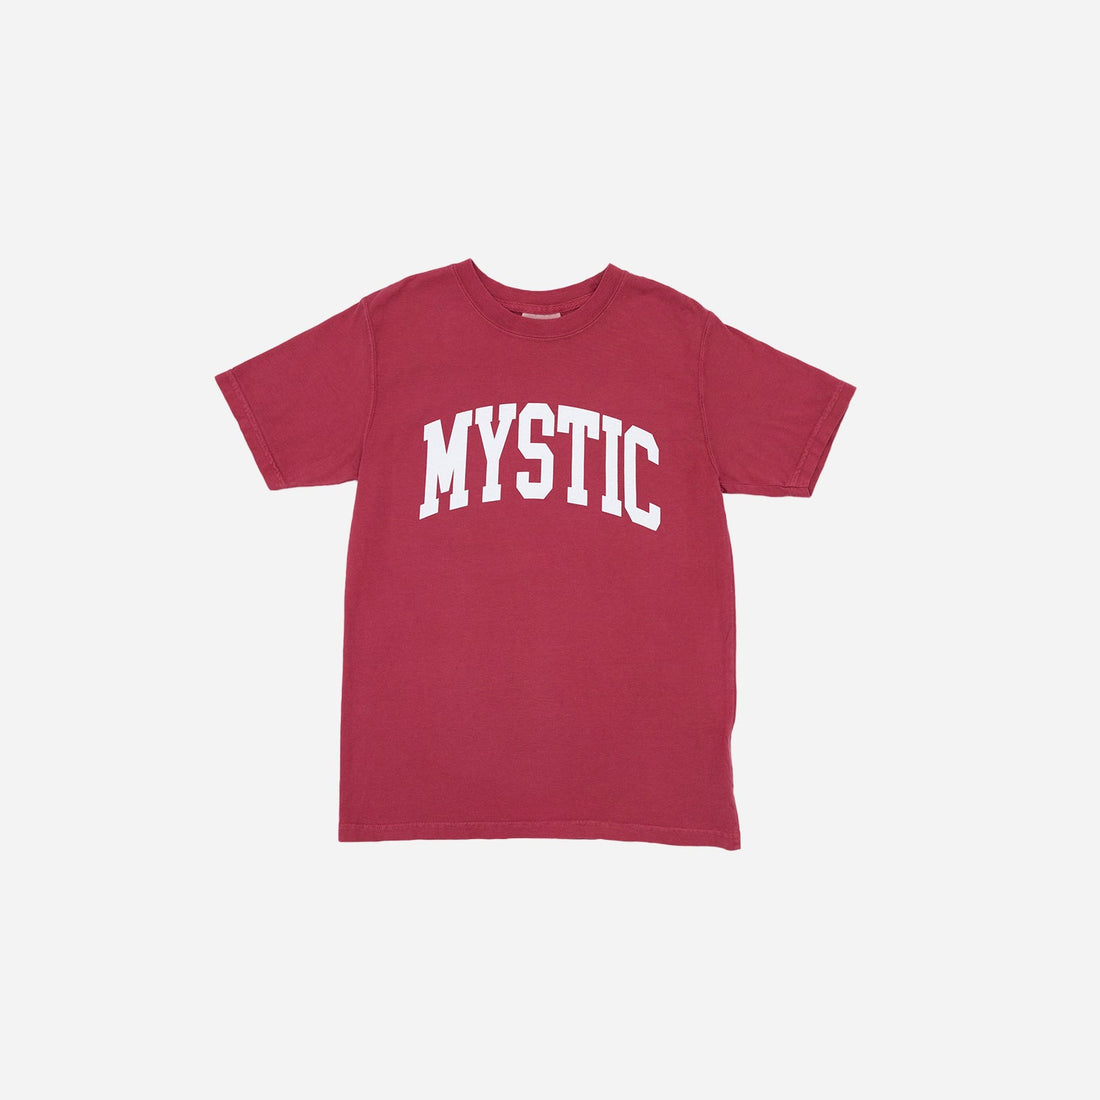 Mystic Kids Tee in Crimson Red